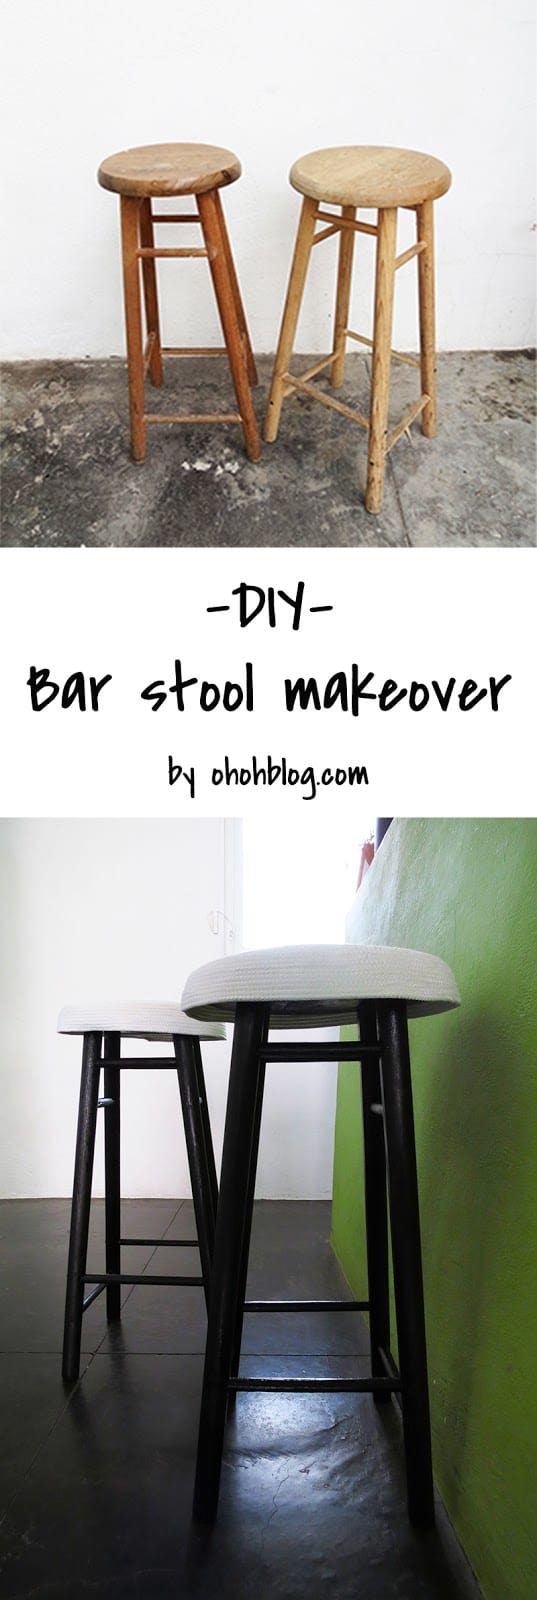 Bar stool makeover